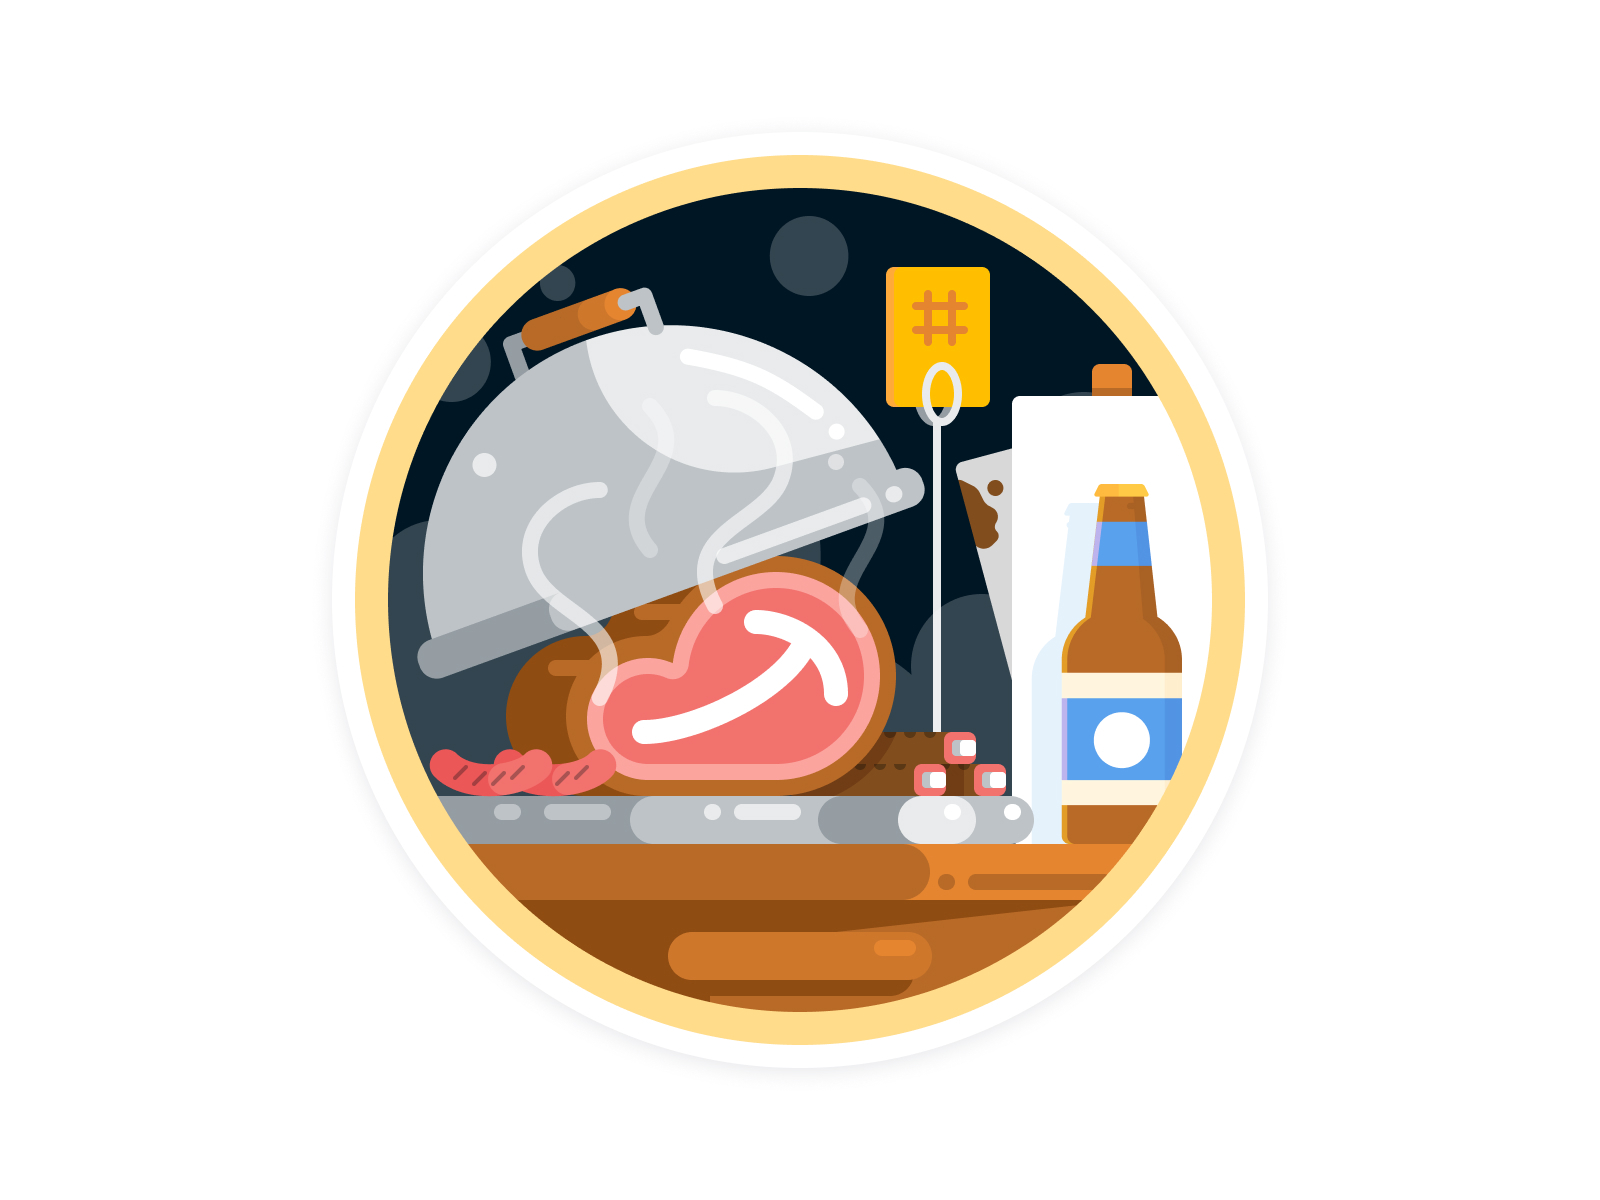 Illustration of a meat smorgasbord